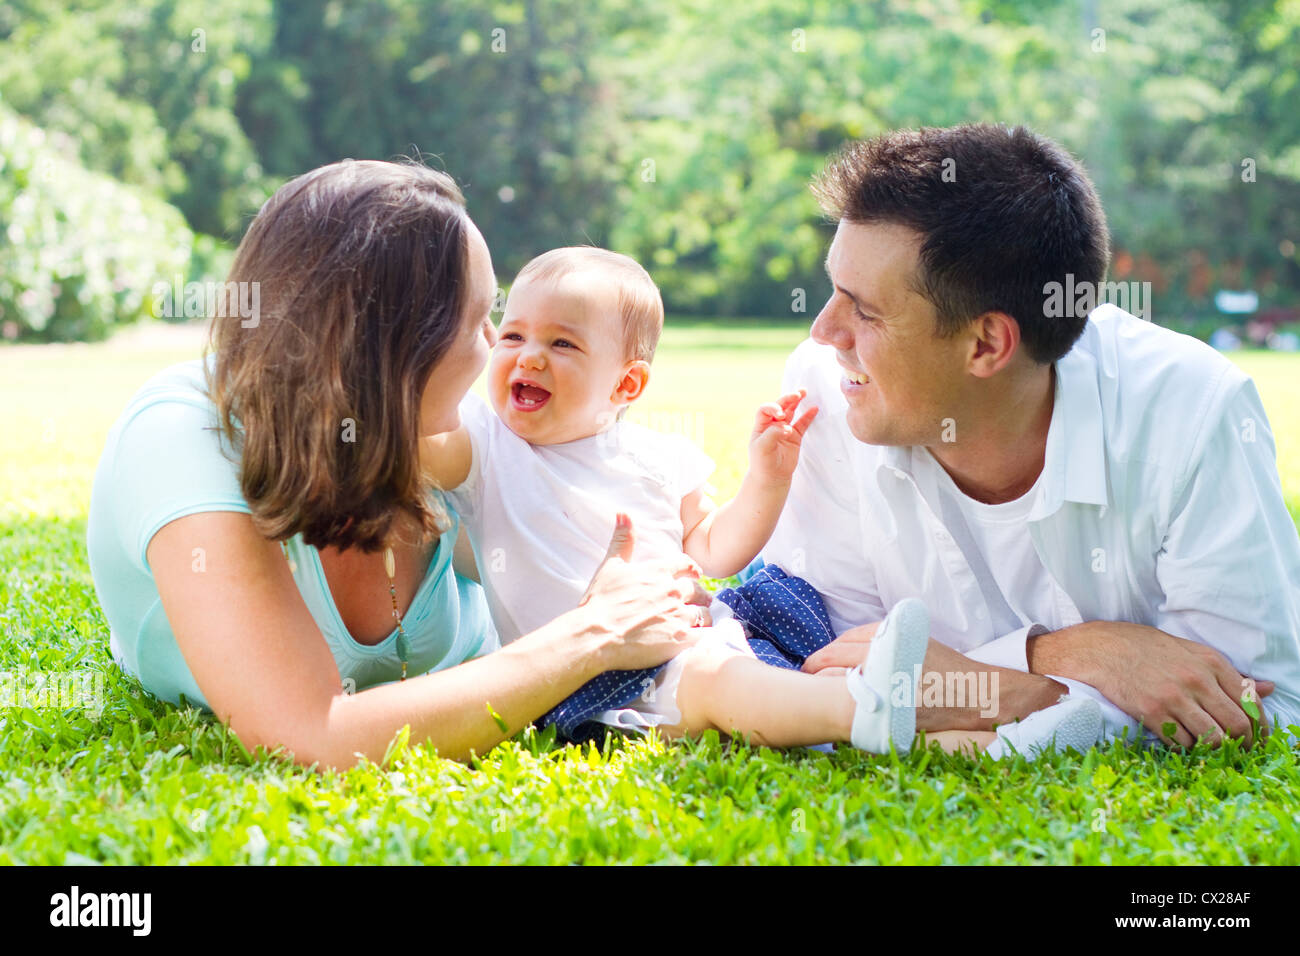 sehr nette junge Familie im park Stockfoto